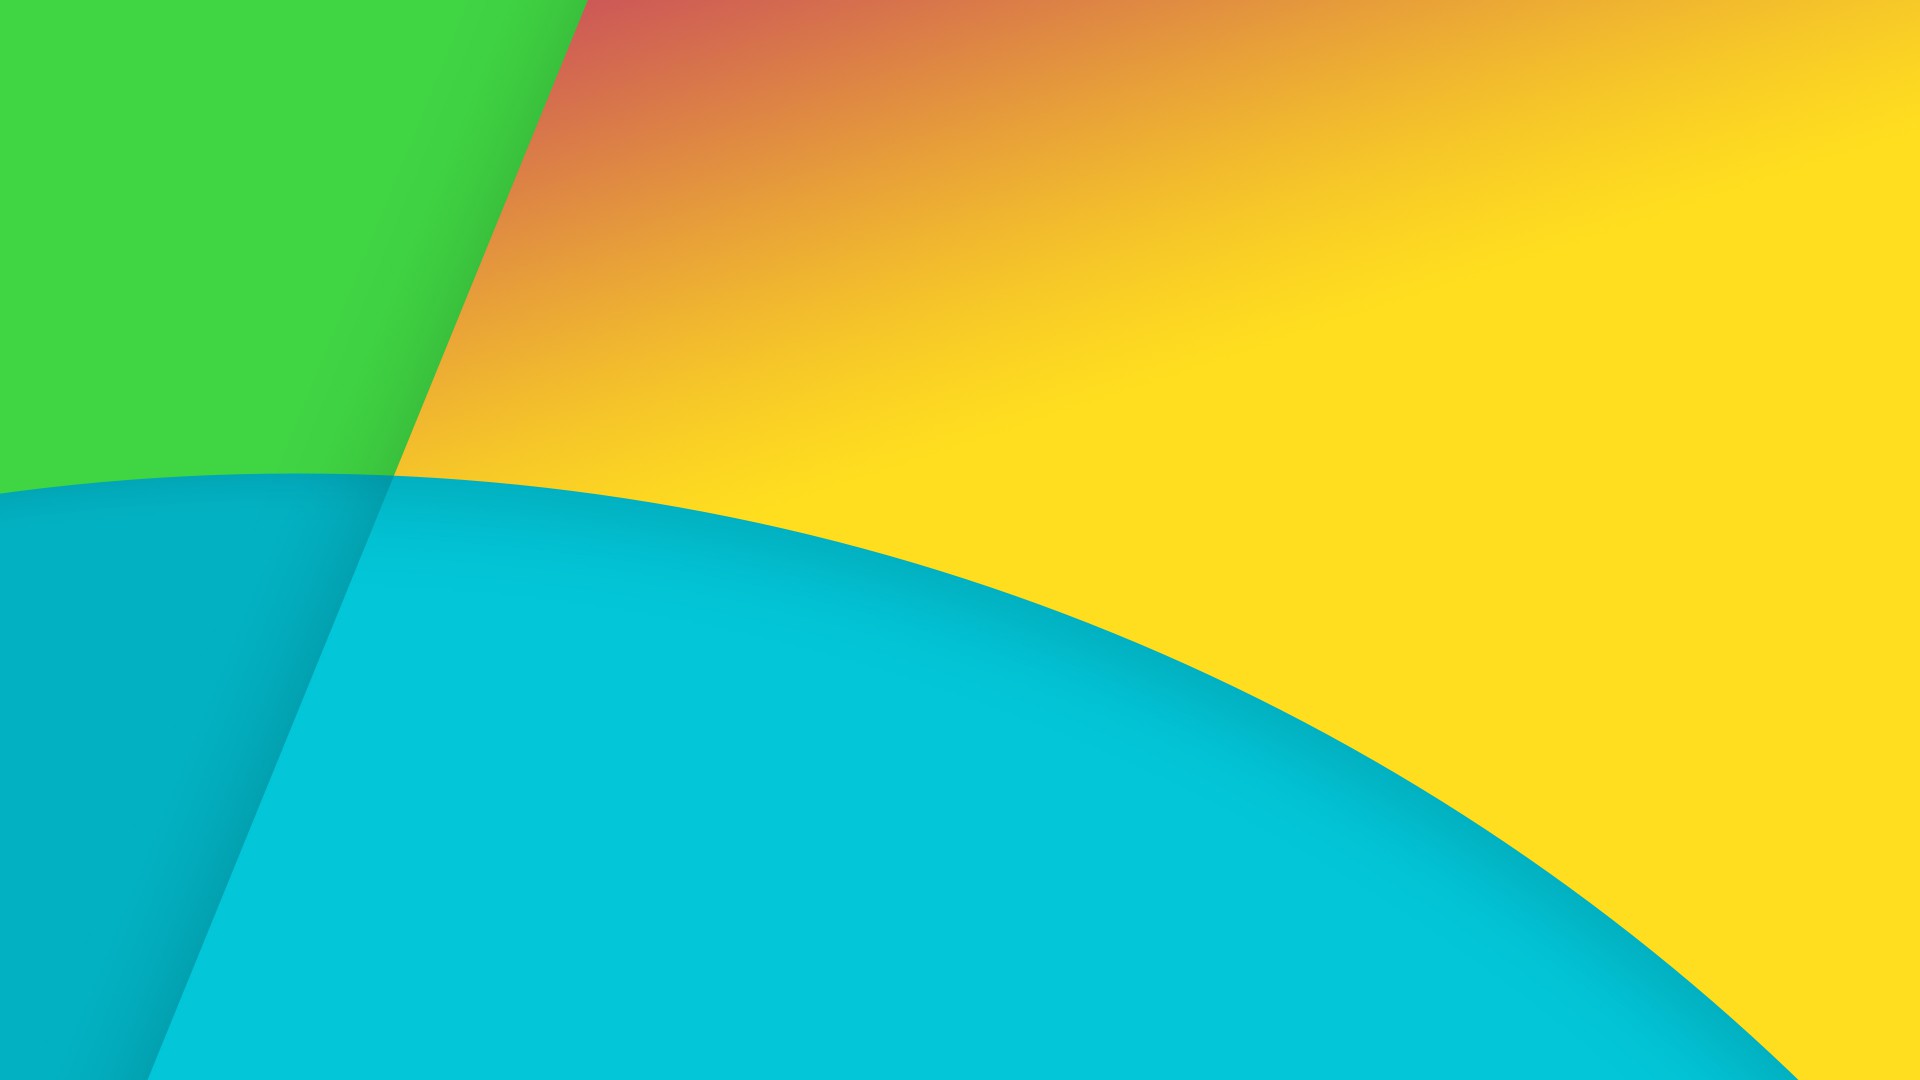 Андроид, 4k, 5k, абстракция, голубой, желтый, зеленый, android, 4k, 5k wallpaper, abstract, yellow, blue, green (horizontal)